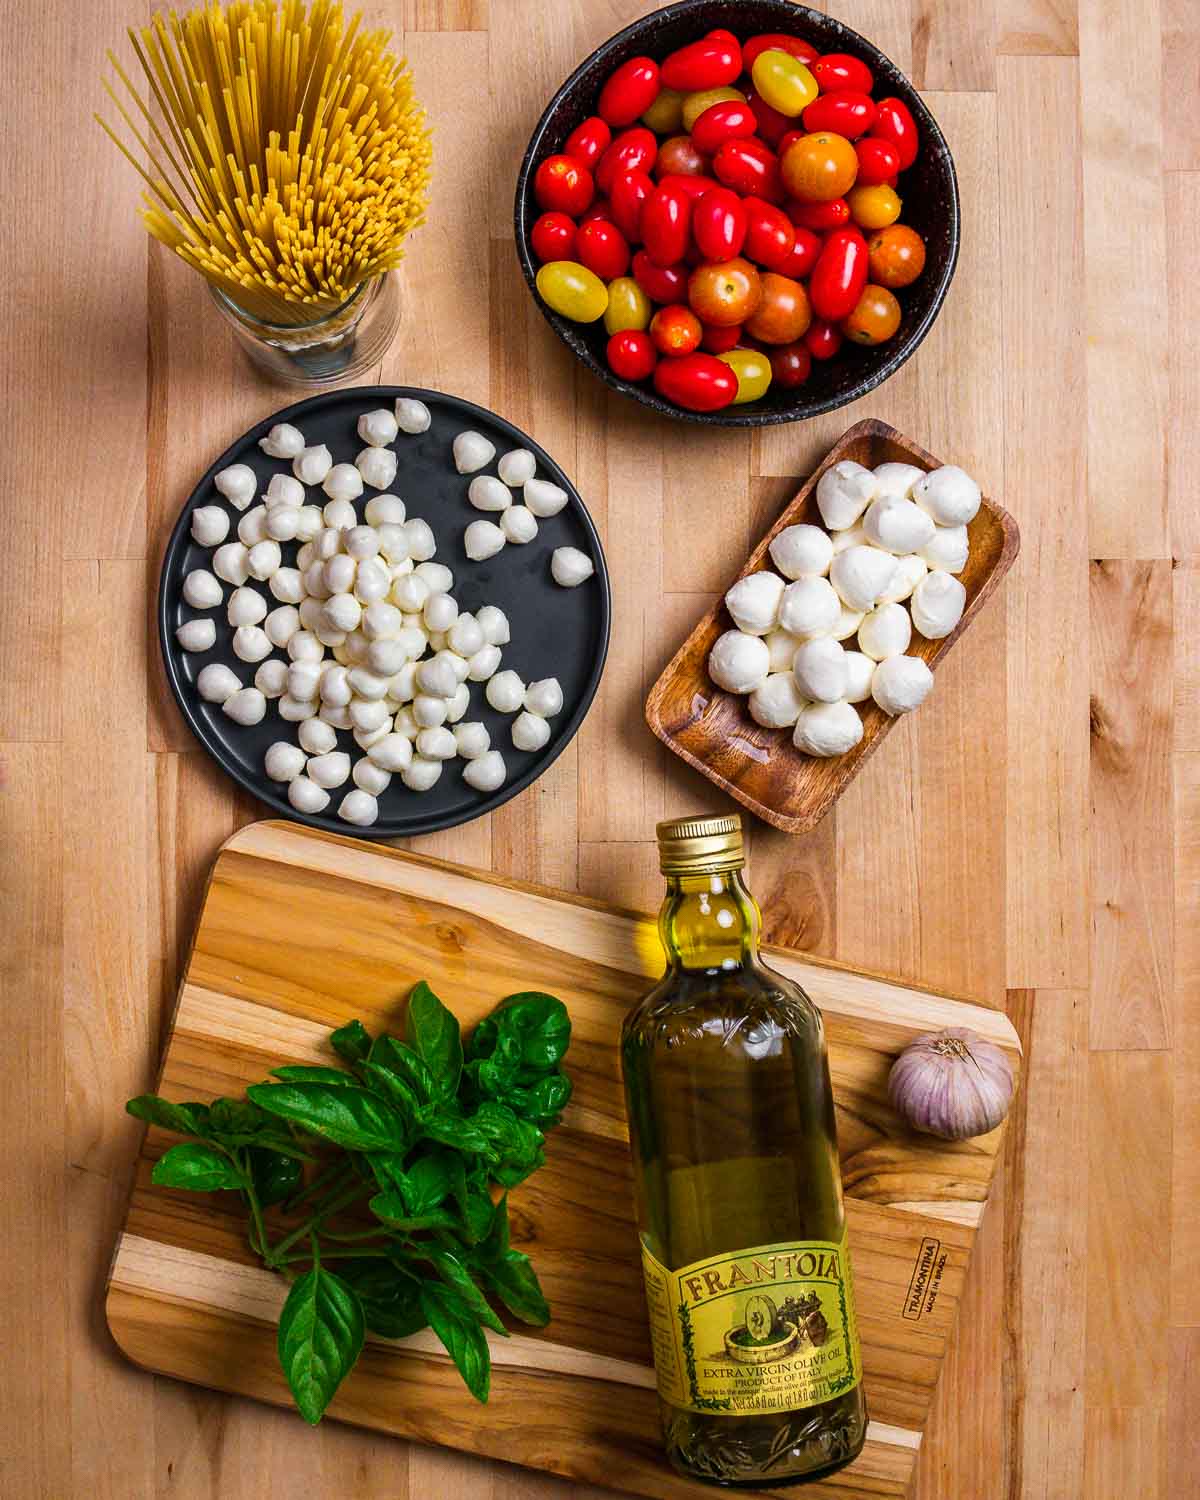 Ingredients shown: linguine, tomatoes, mozzarella balls, basil, olive oil, and garlic.